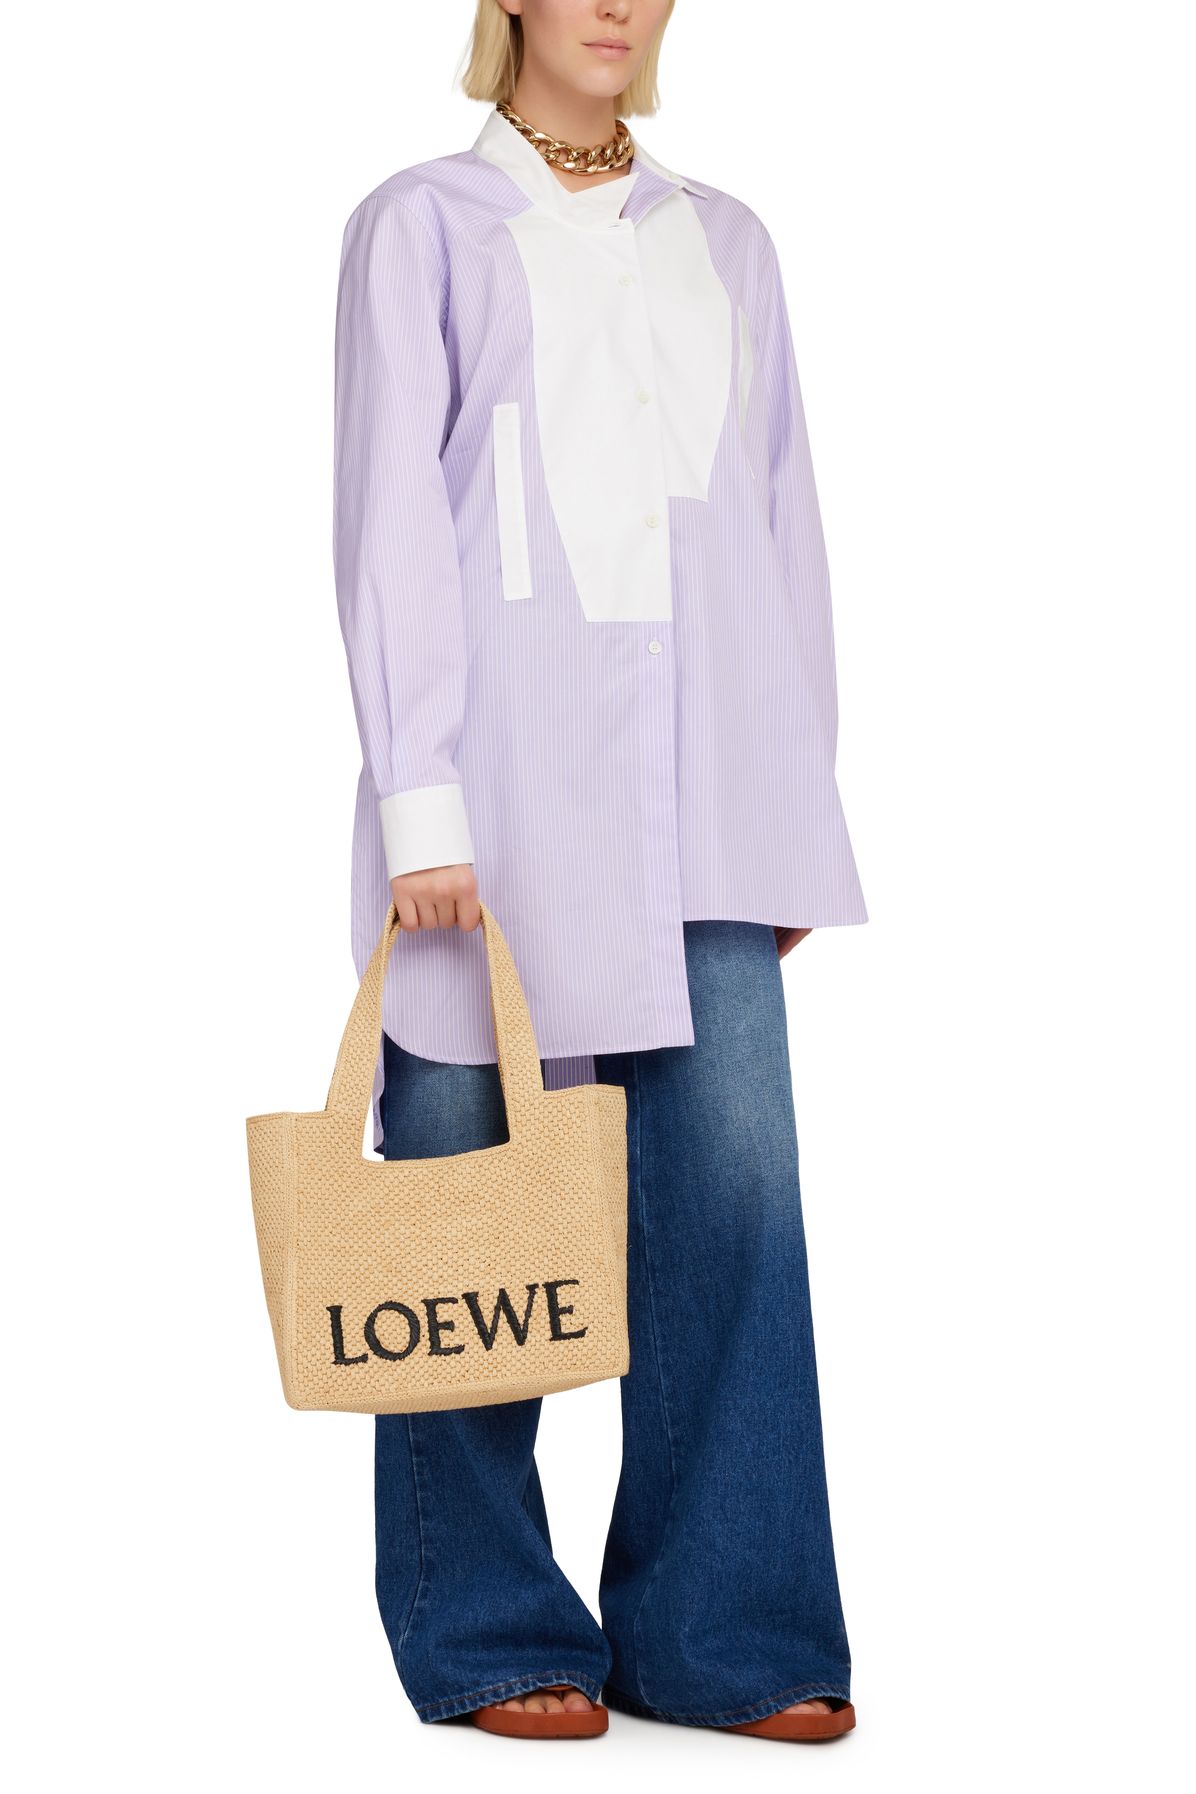 Loewe Medium tote bag with logo